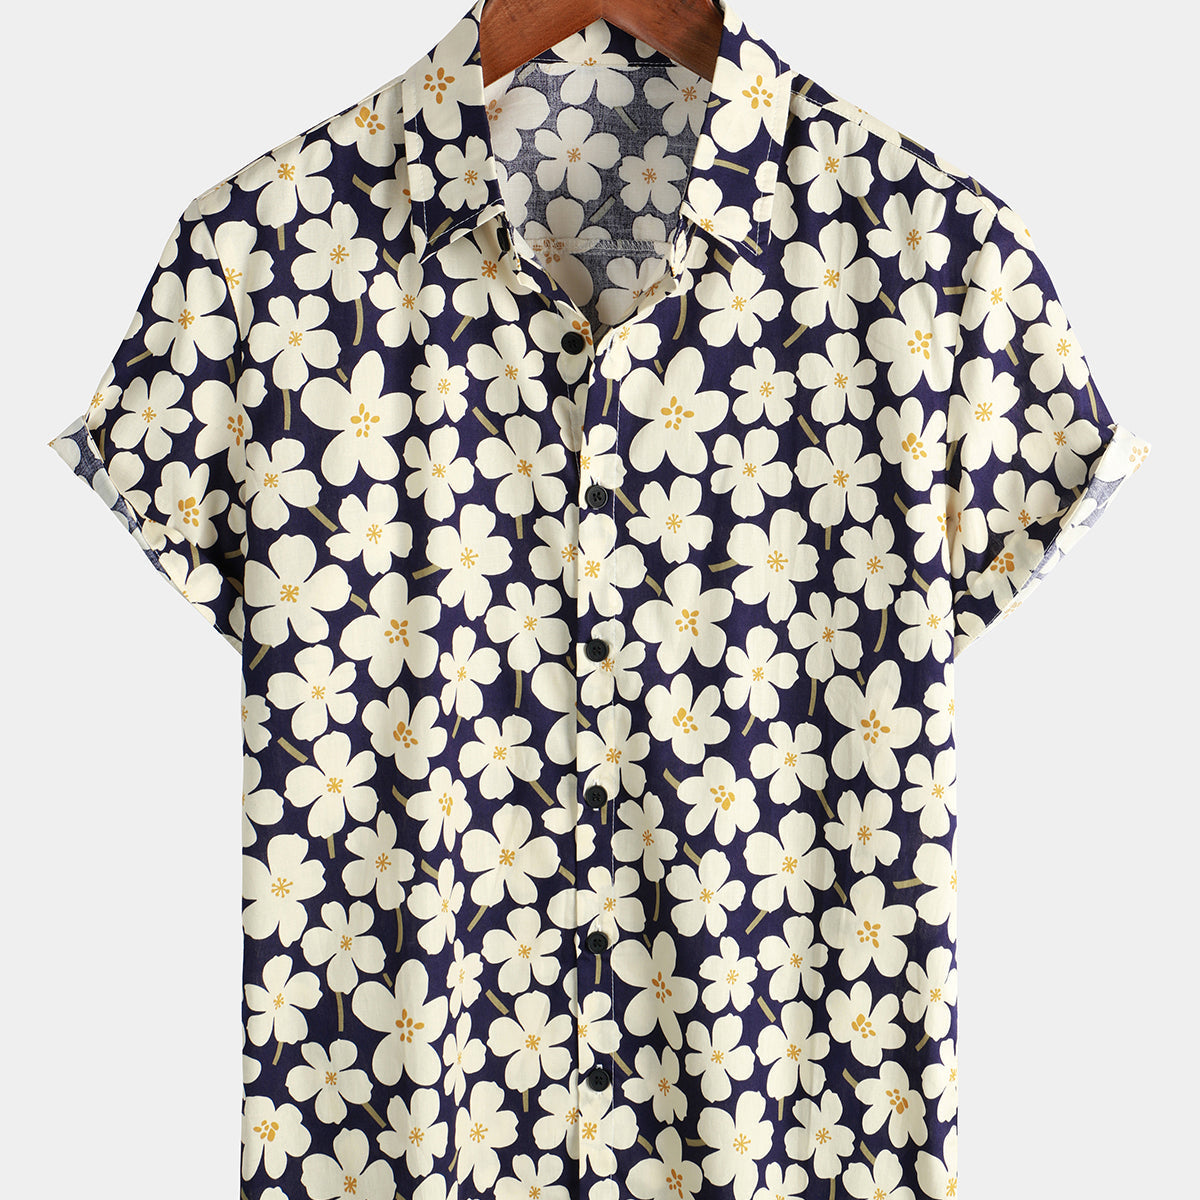 Men's Summer Floral Print Holiday Flower Resort Casual Lapel Light Blue Short Sleeve Shirt